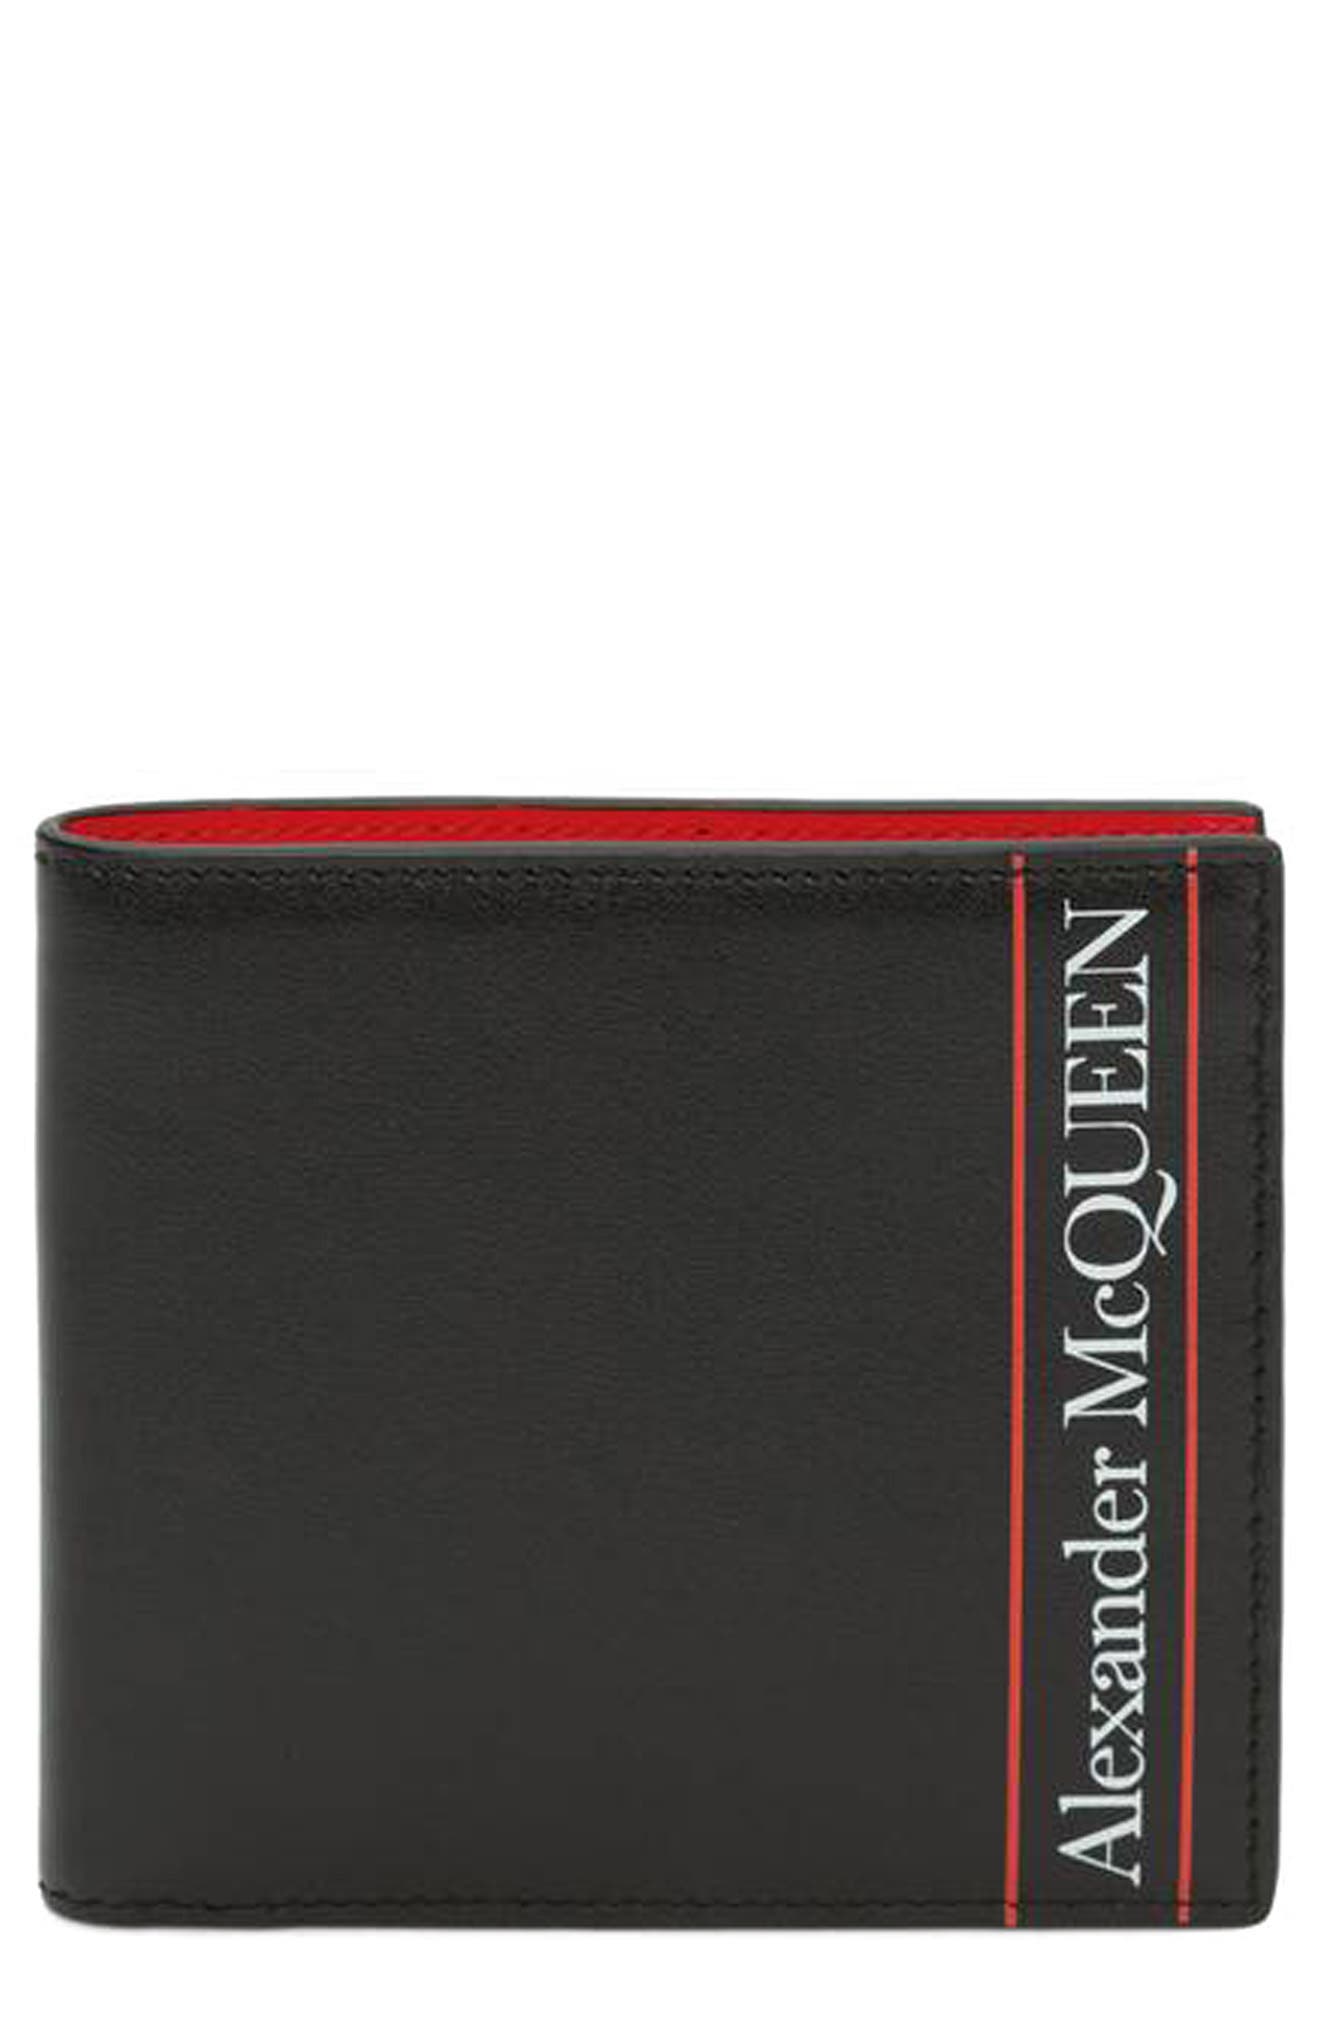 Alexander McQueen Leather Billfold Wallet in Black/Red at Nordstrom